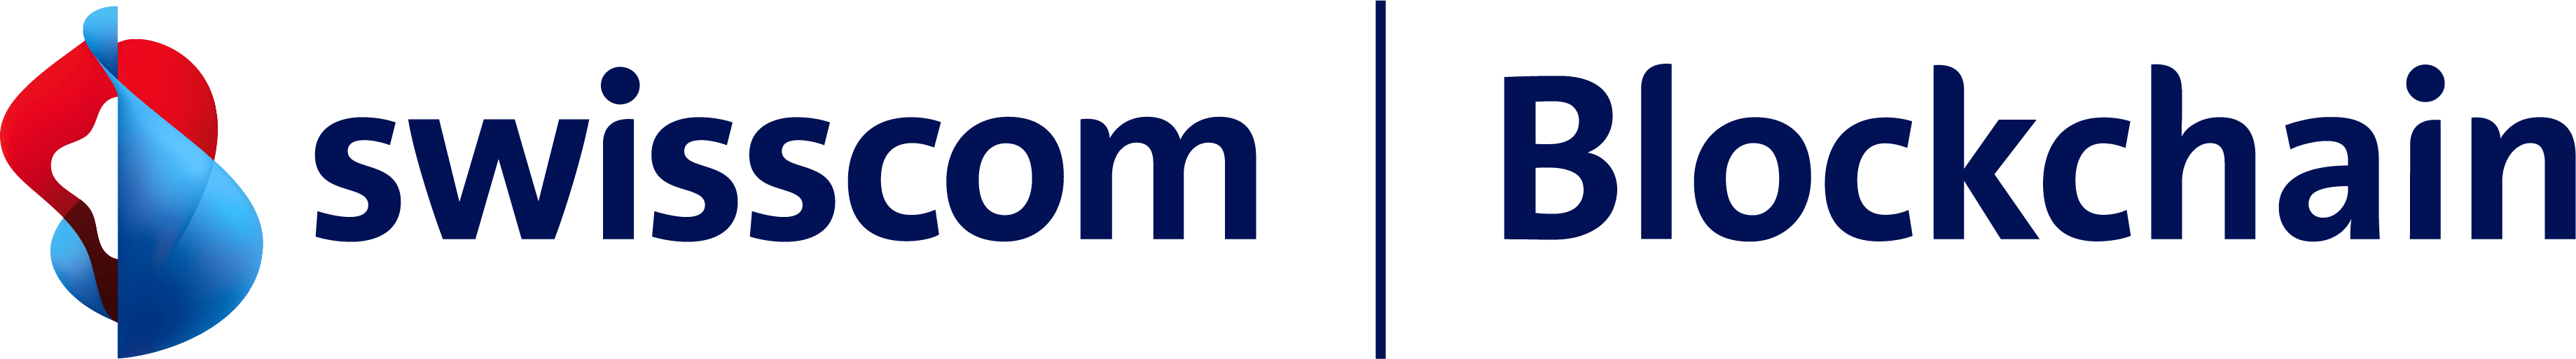 Swisscom Blockchain logo